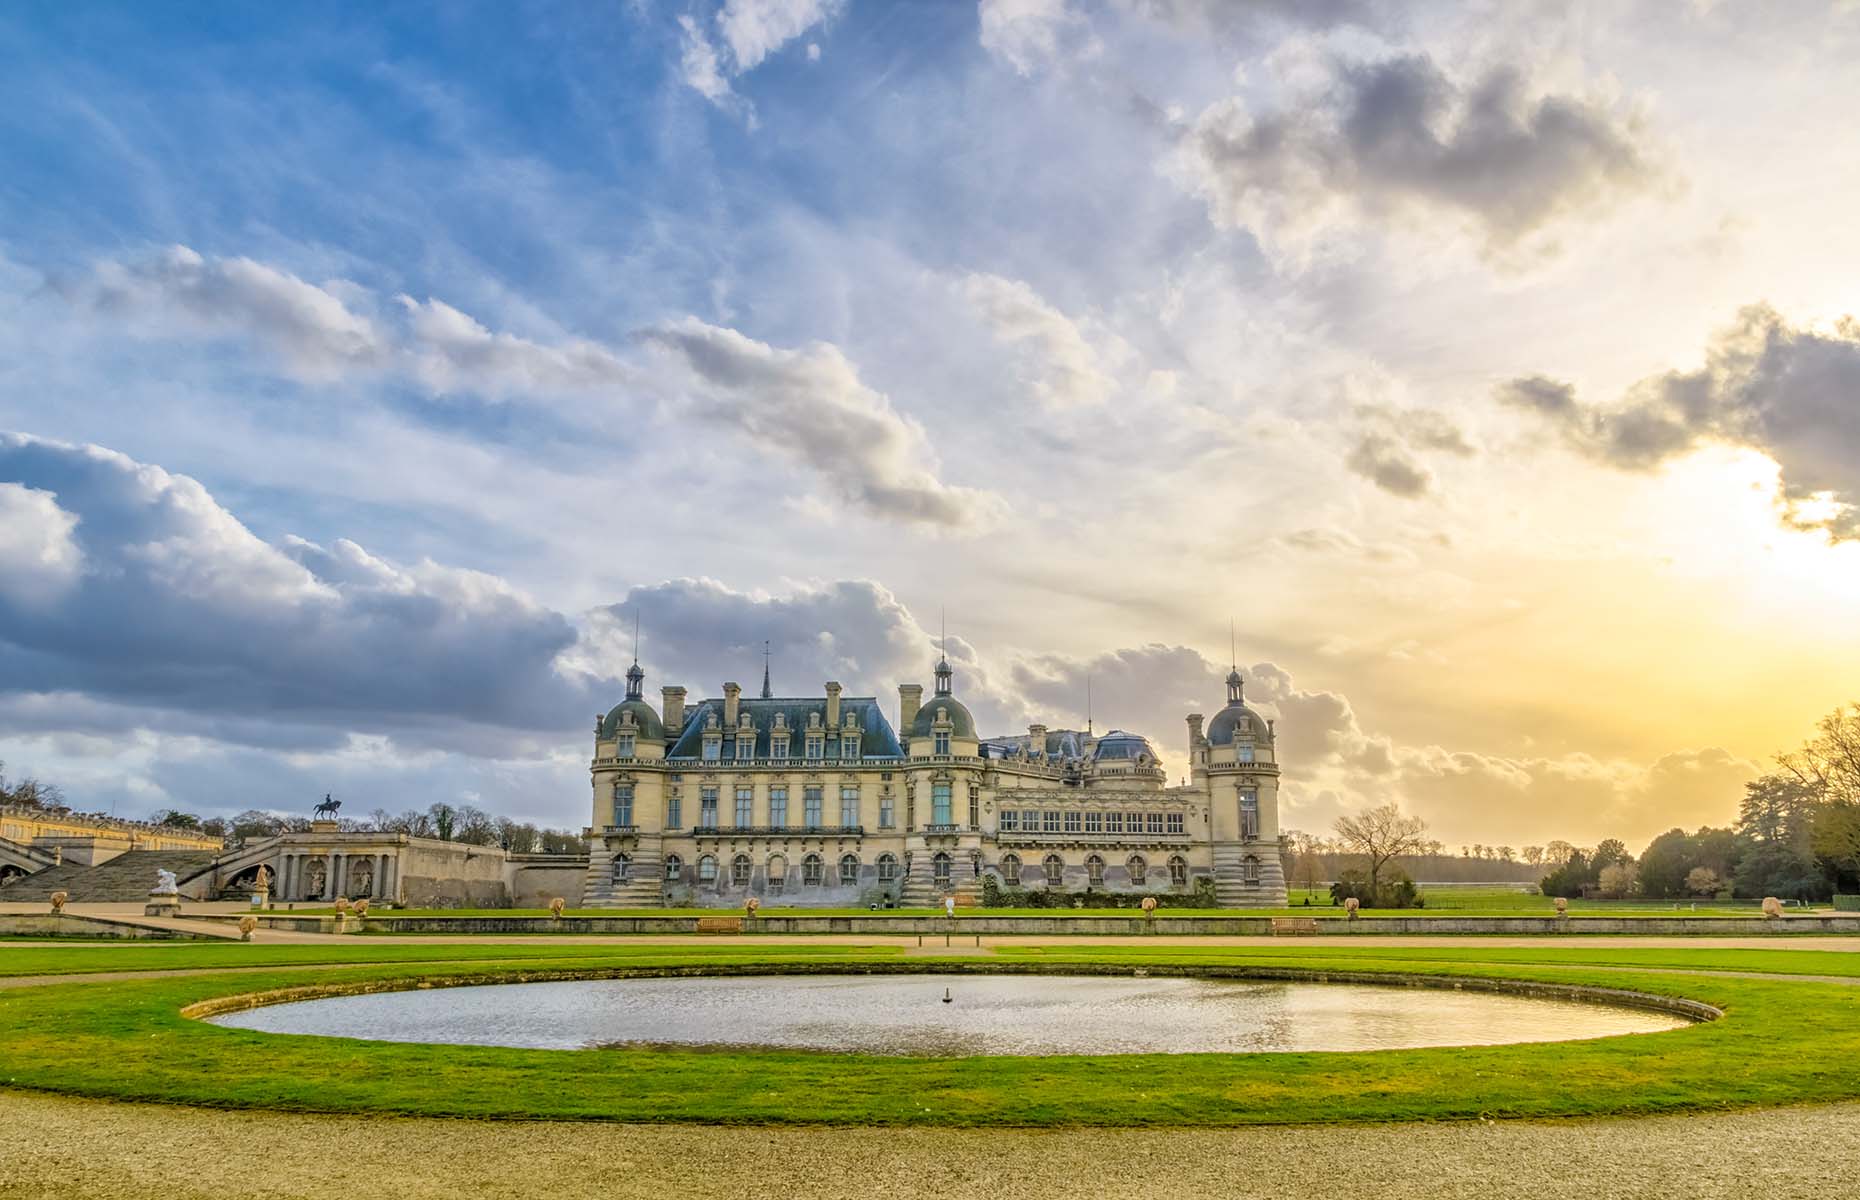 Chantilly in northern France (Image: Josegmsphoto/Shutterstock)